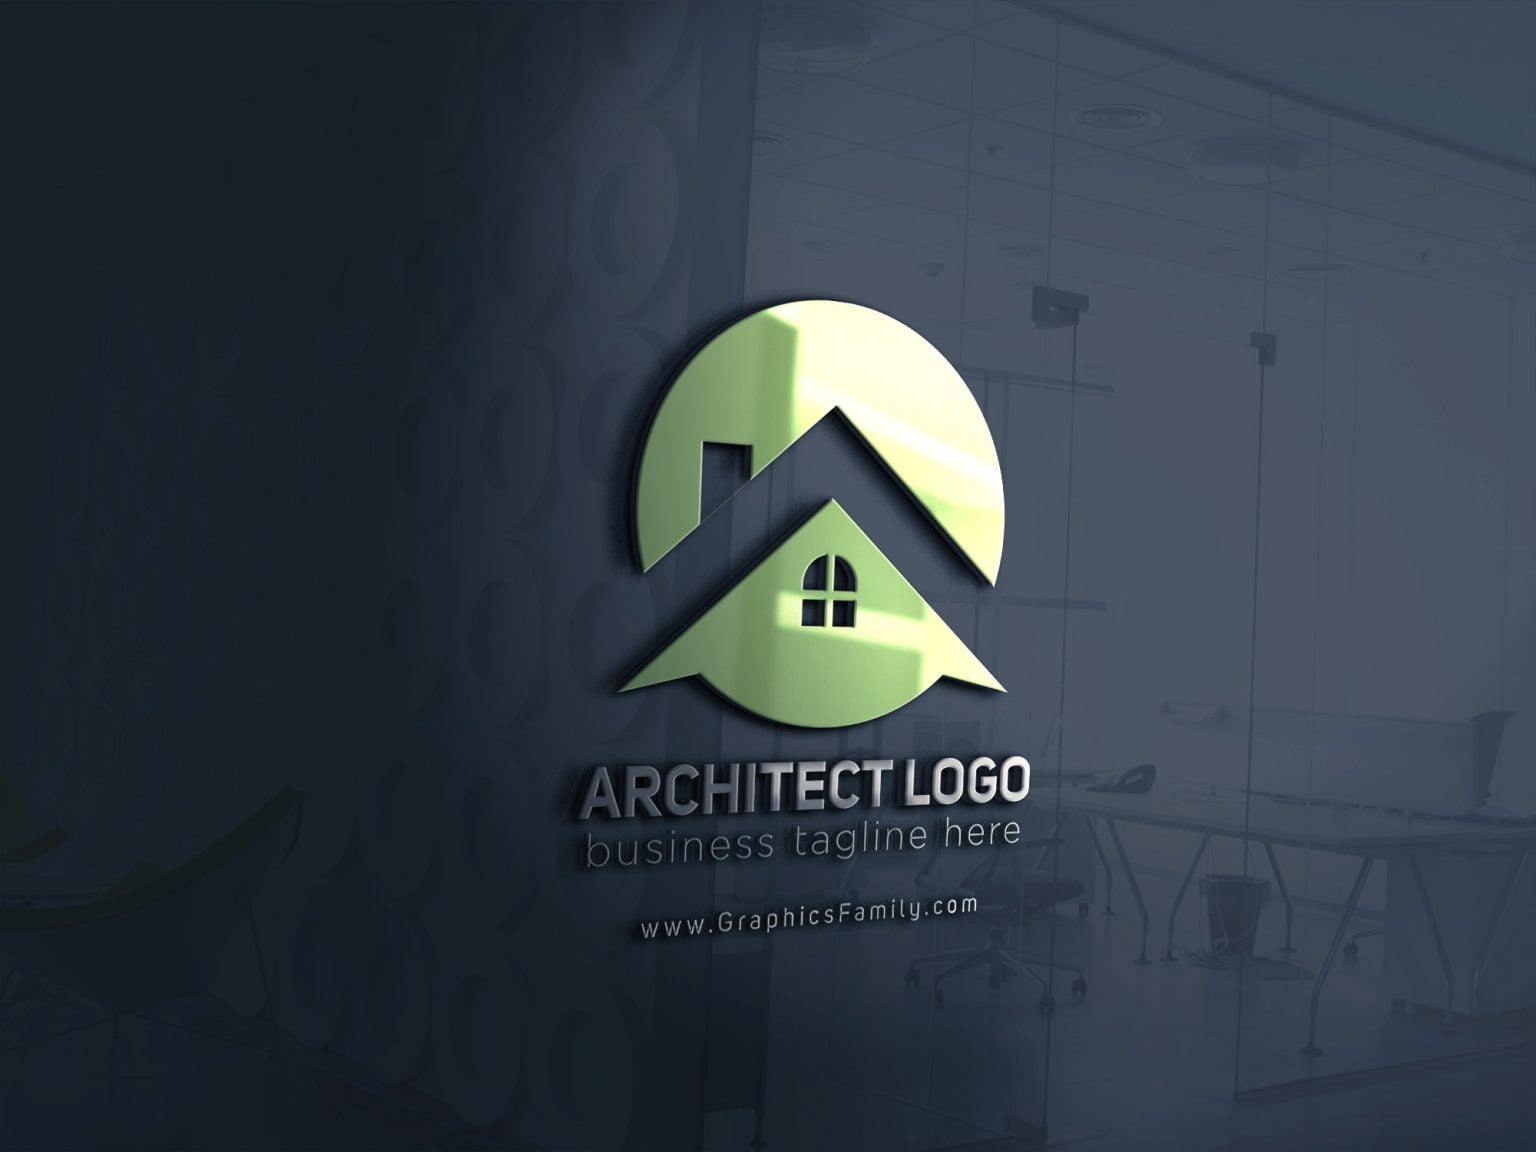 Download Architect PSD Logo Design 1536x1152 